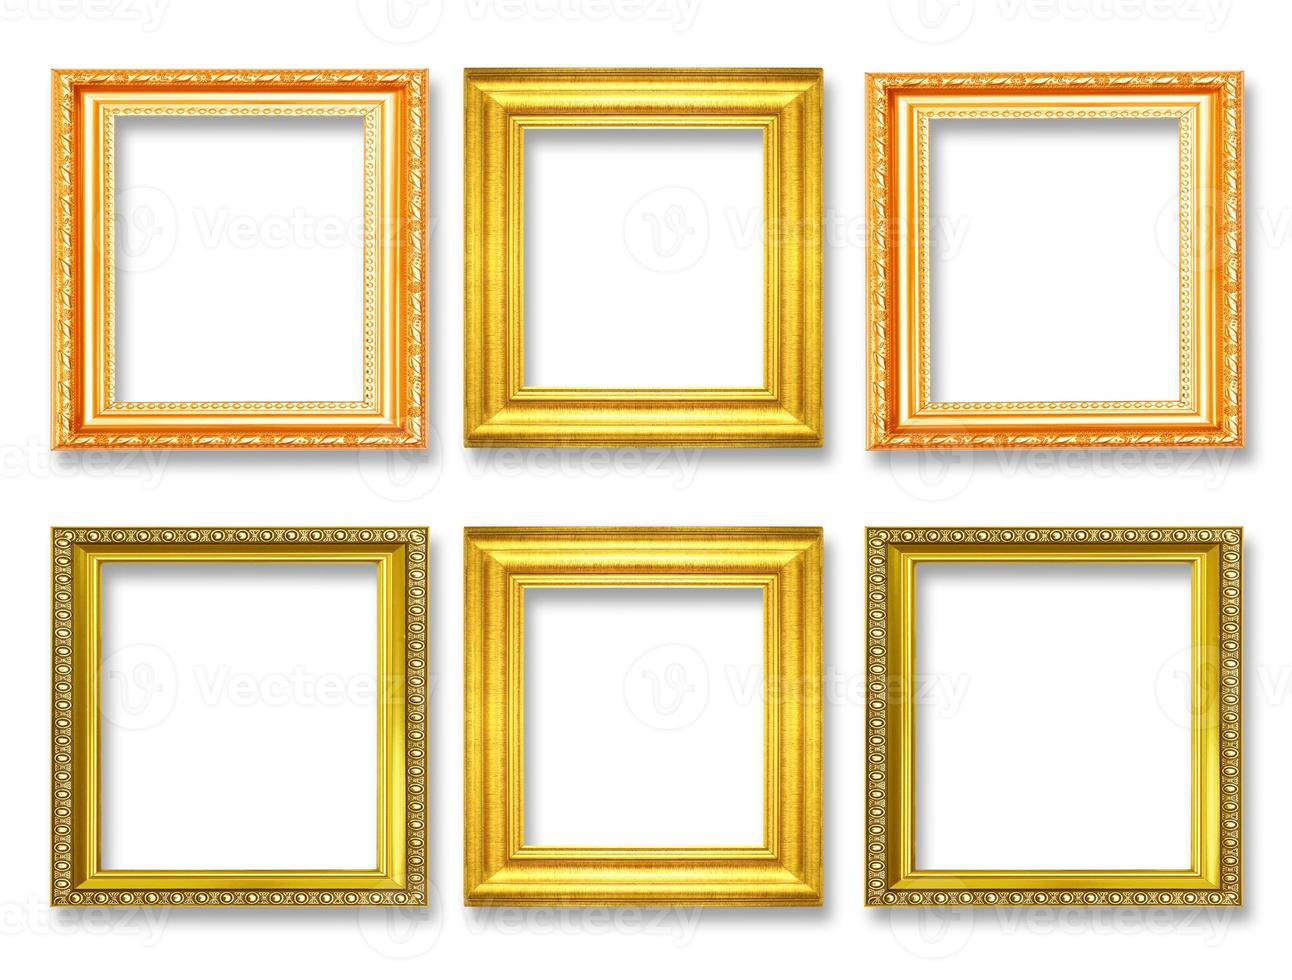 conjunto de moldura dourada vintage isolado no fundo branco foto